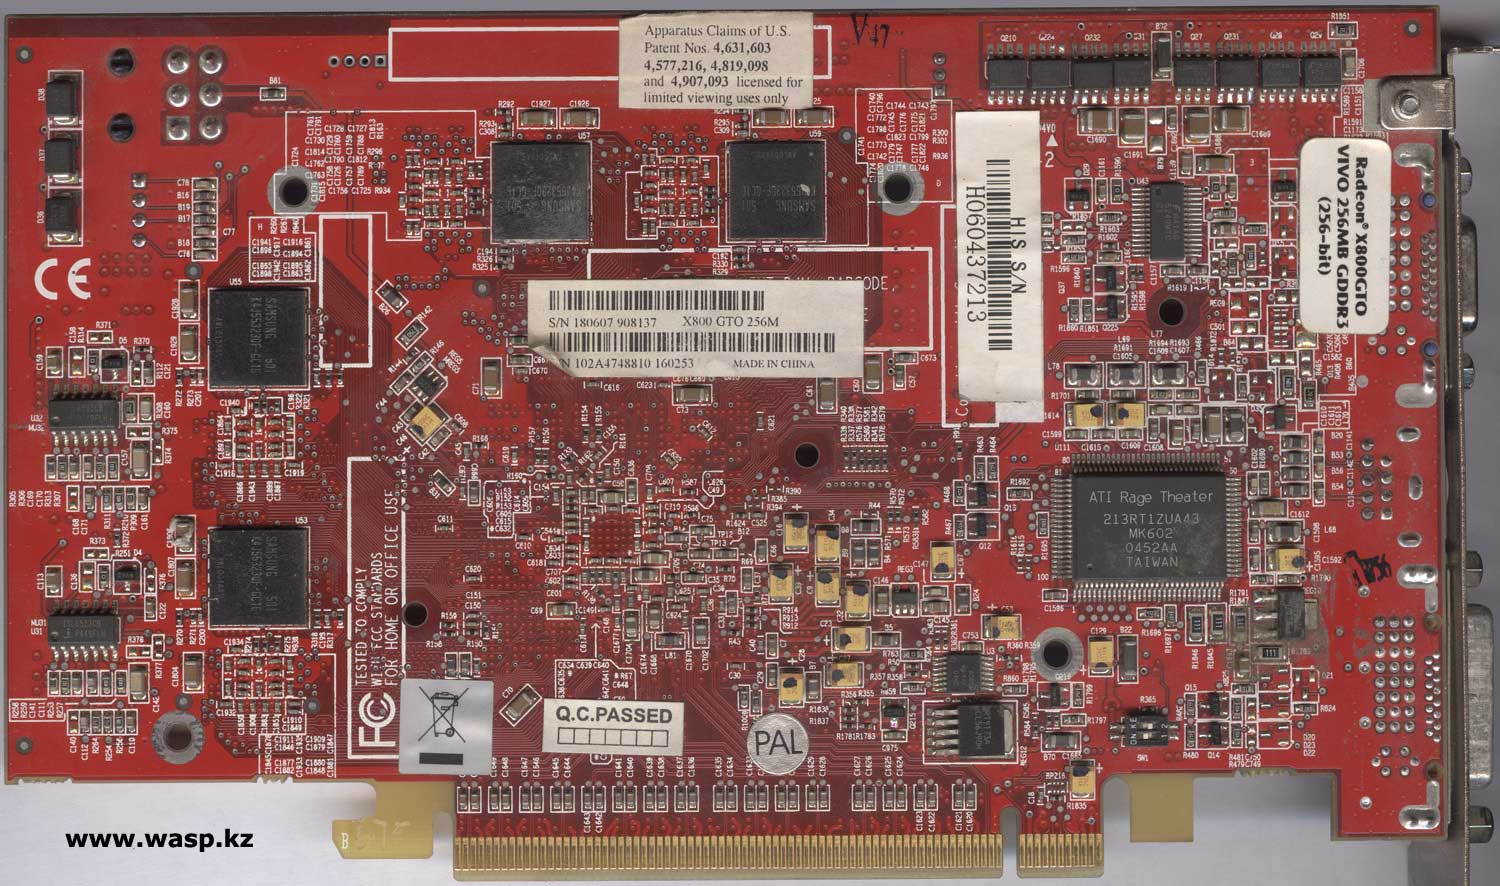 ATI Radeon X800GTO на чипе R480 VIVO Rage Theater 213RT1ZUA43